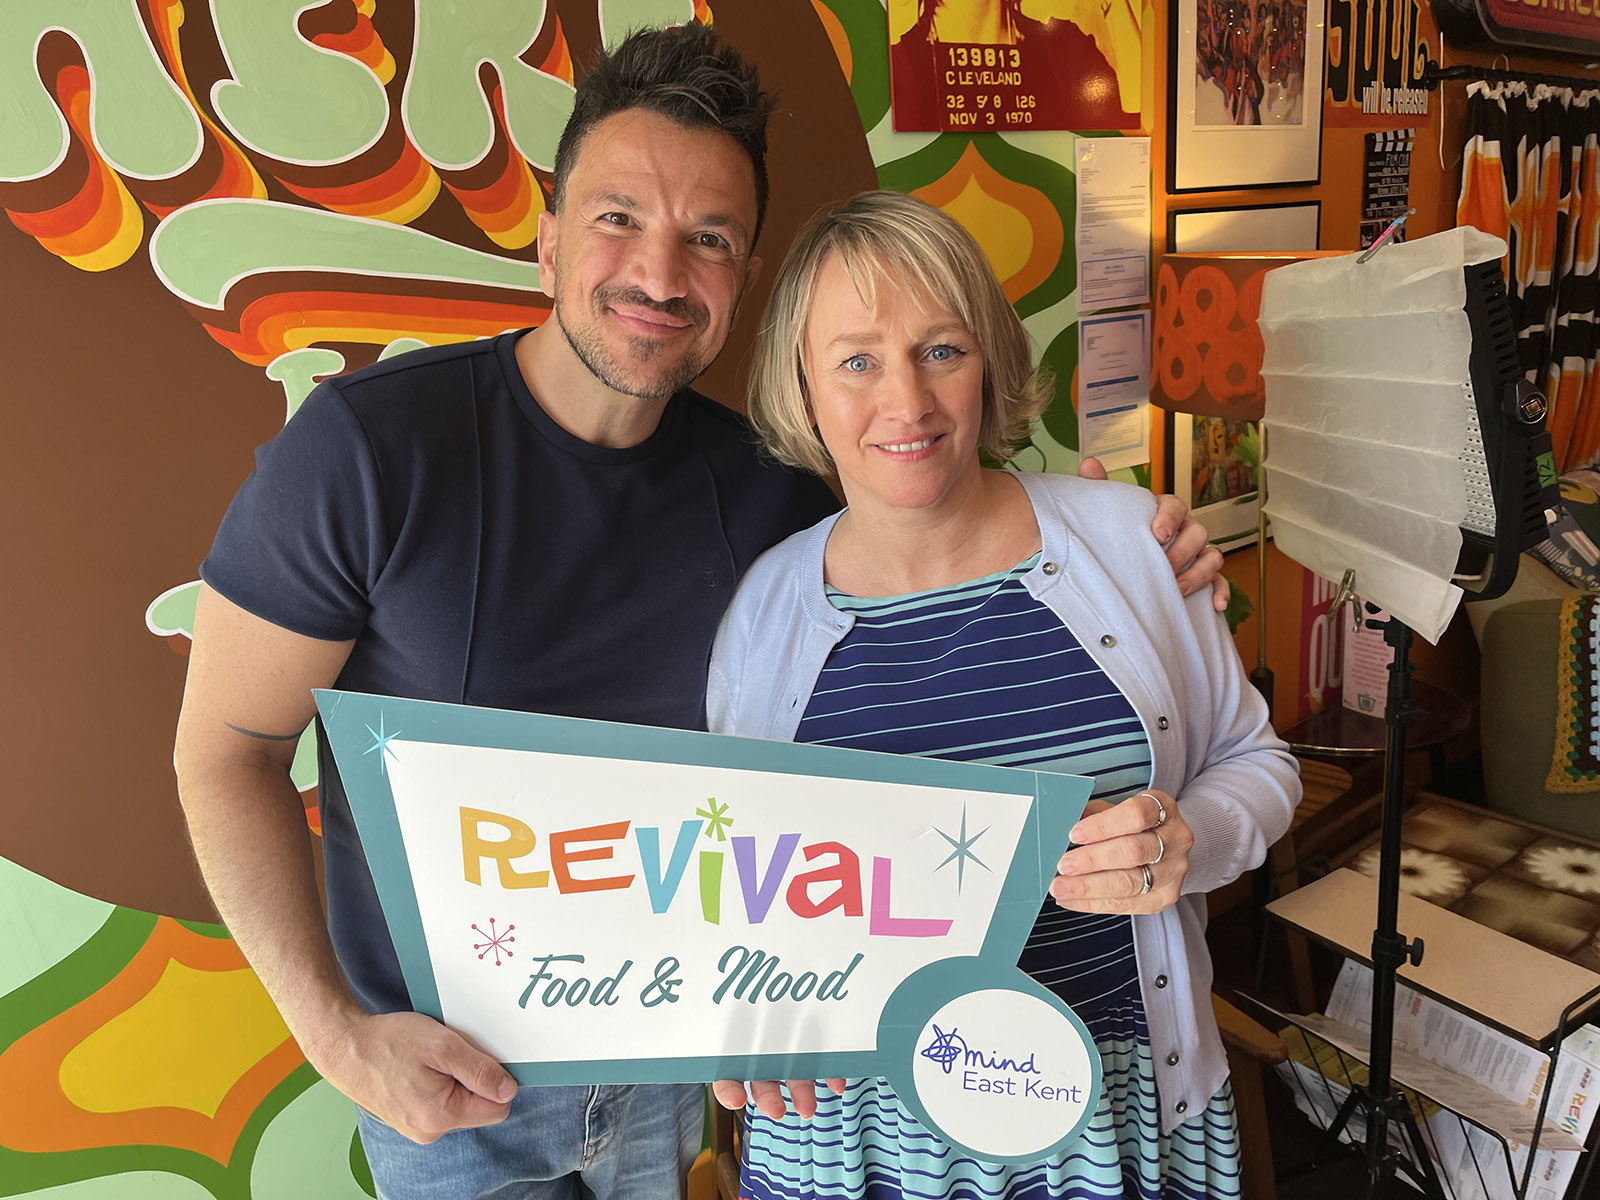 Peter Andre with Revival Food & Mood Executive Director Deborah Haylett